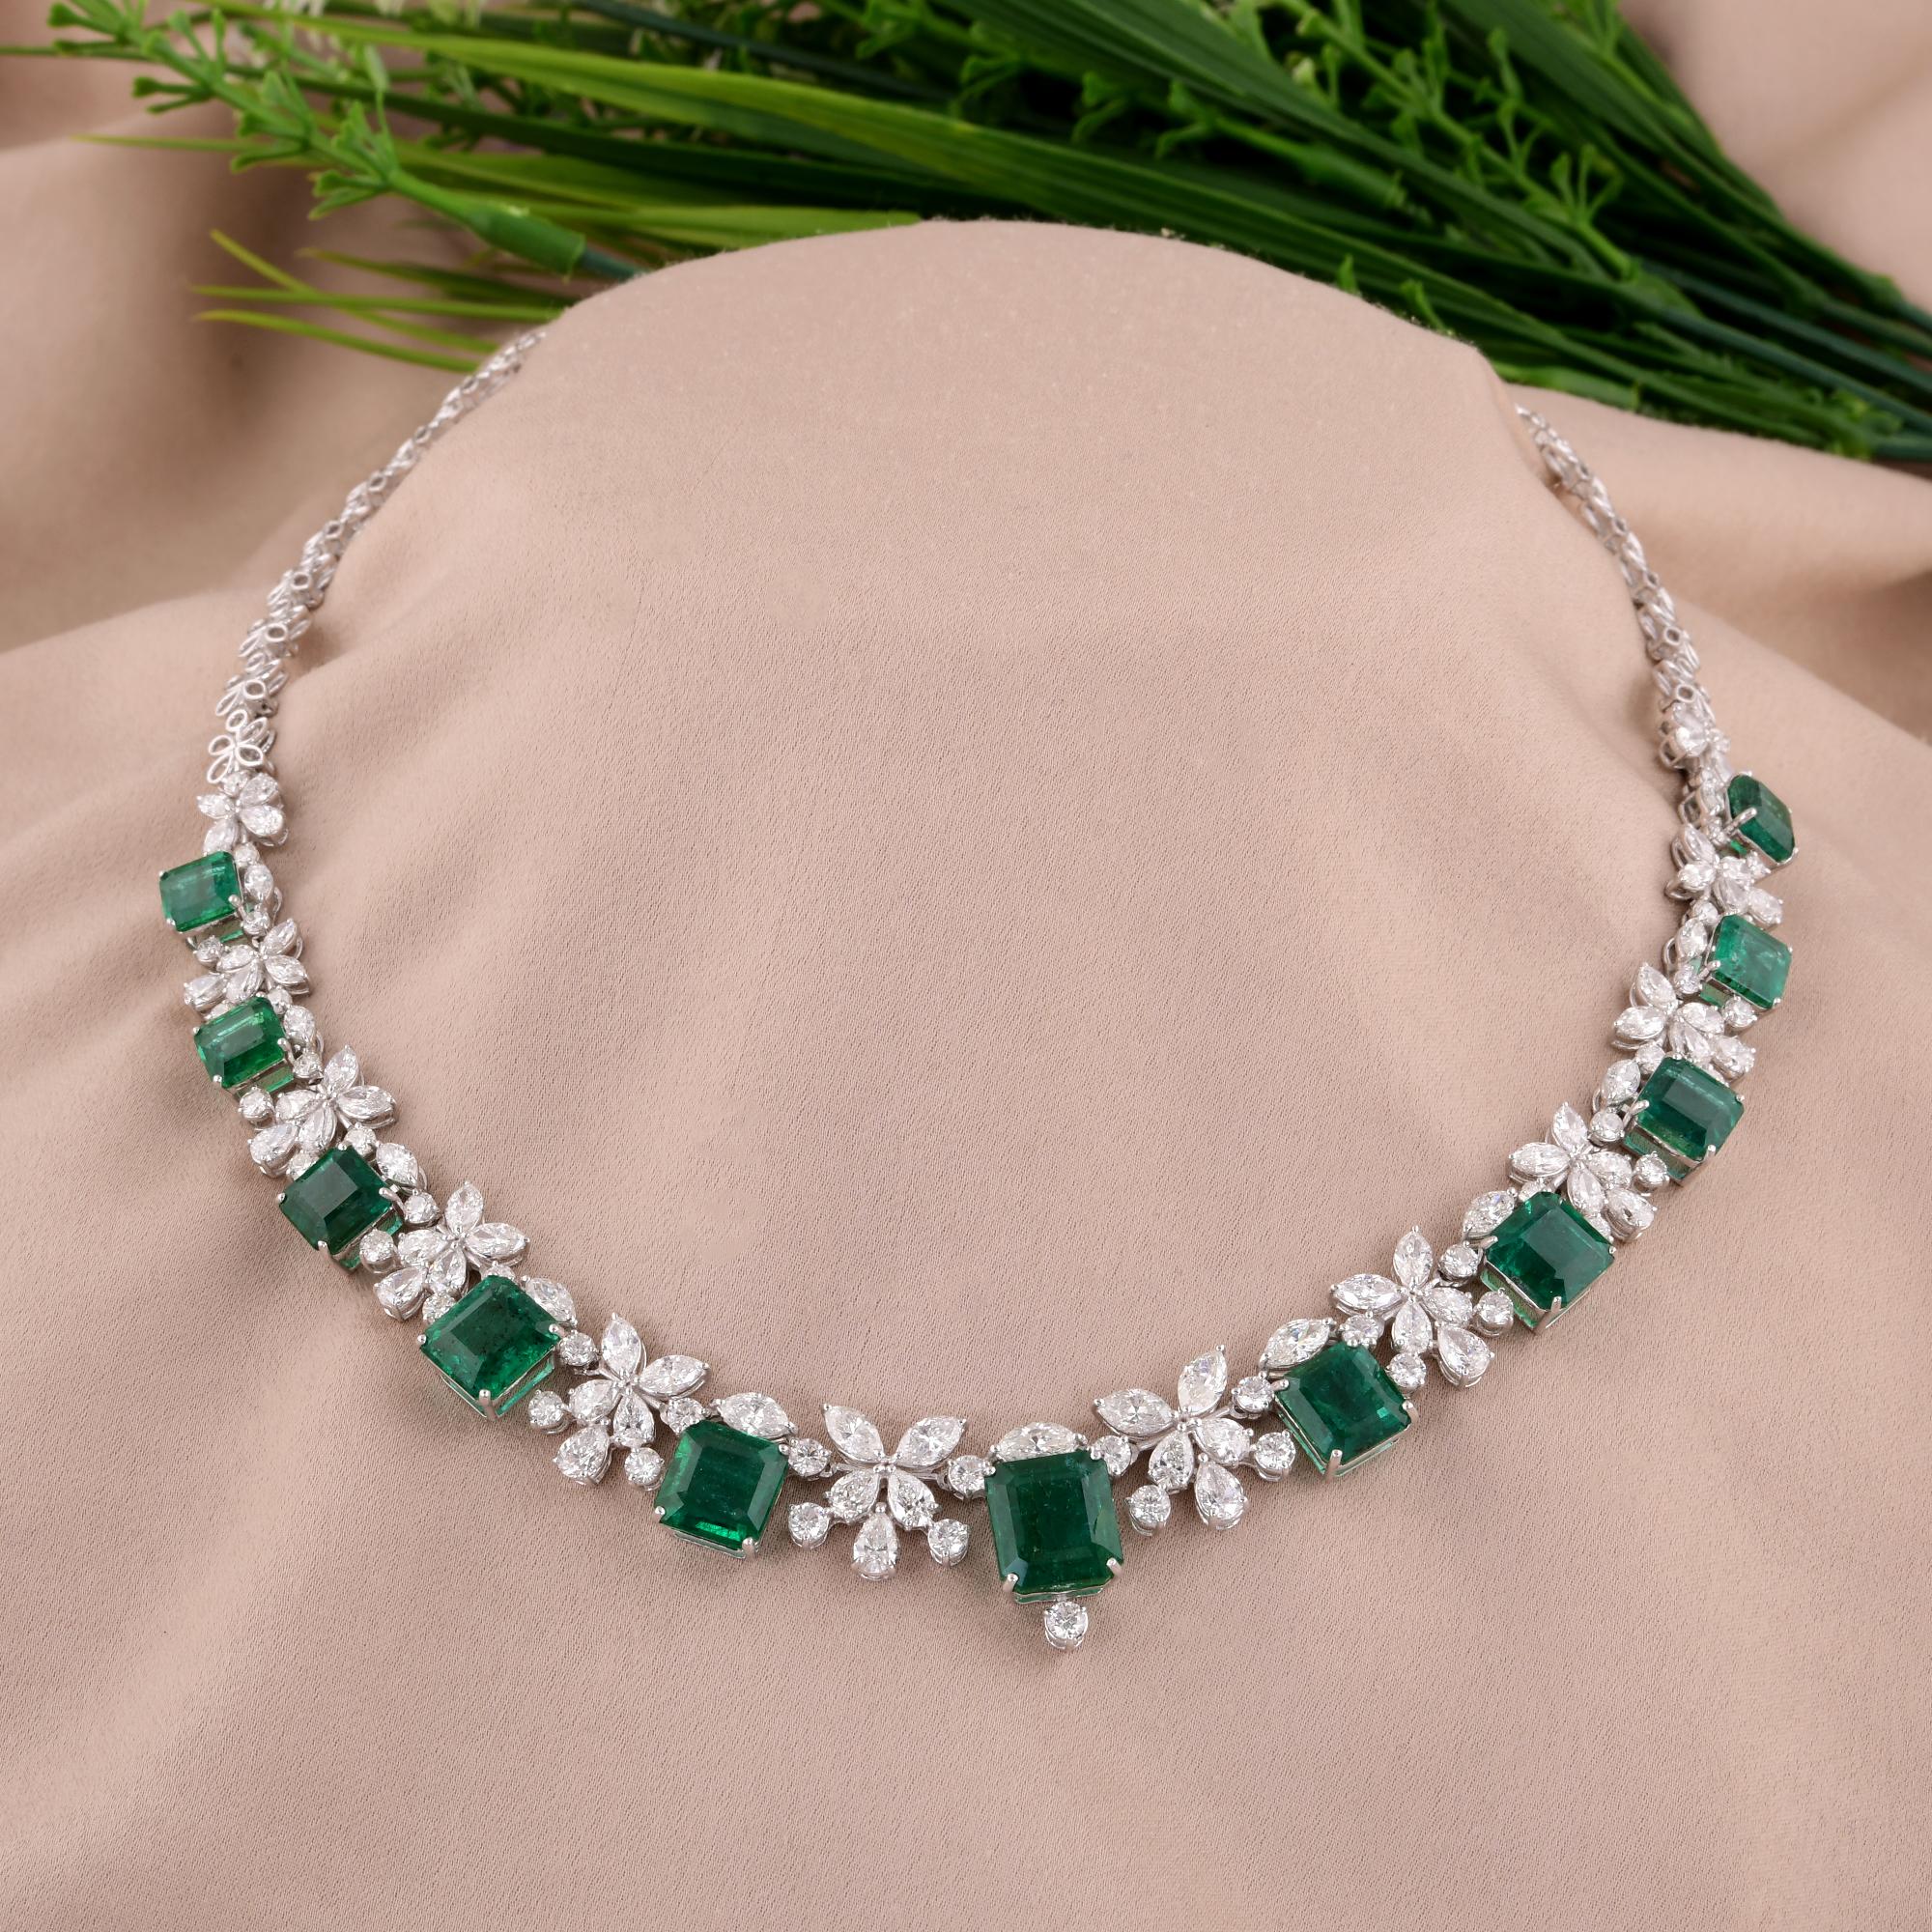 Emerald Cut Zambian Emerald Gemstone Necklace Diamond 14 Karat White Gold Handmade Jewelry For Sale